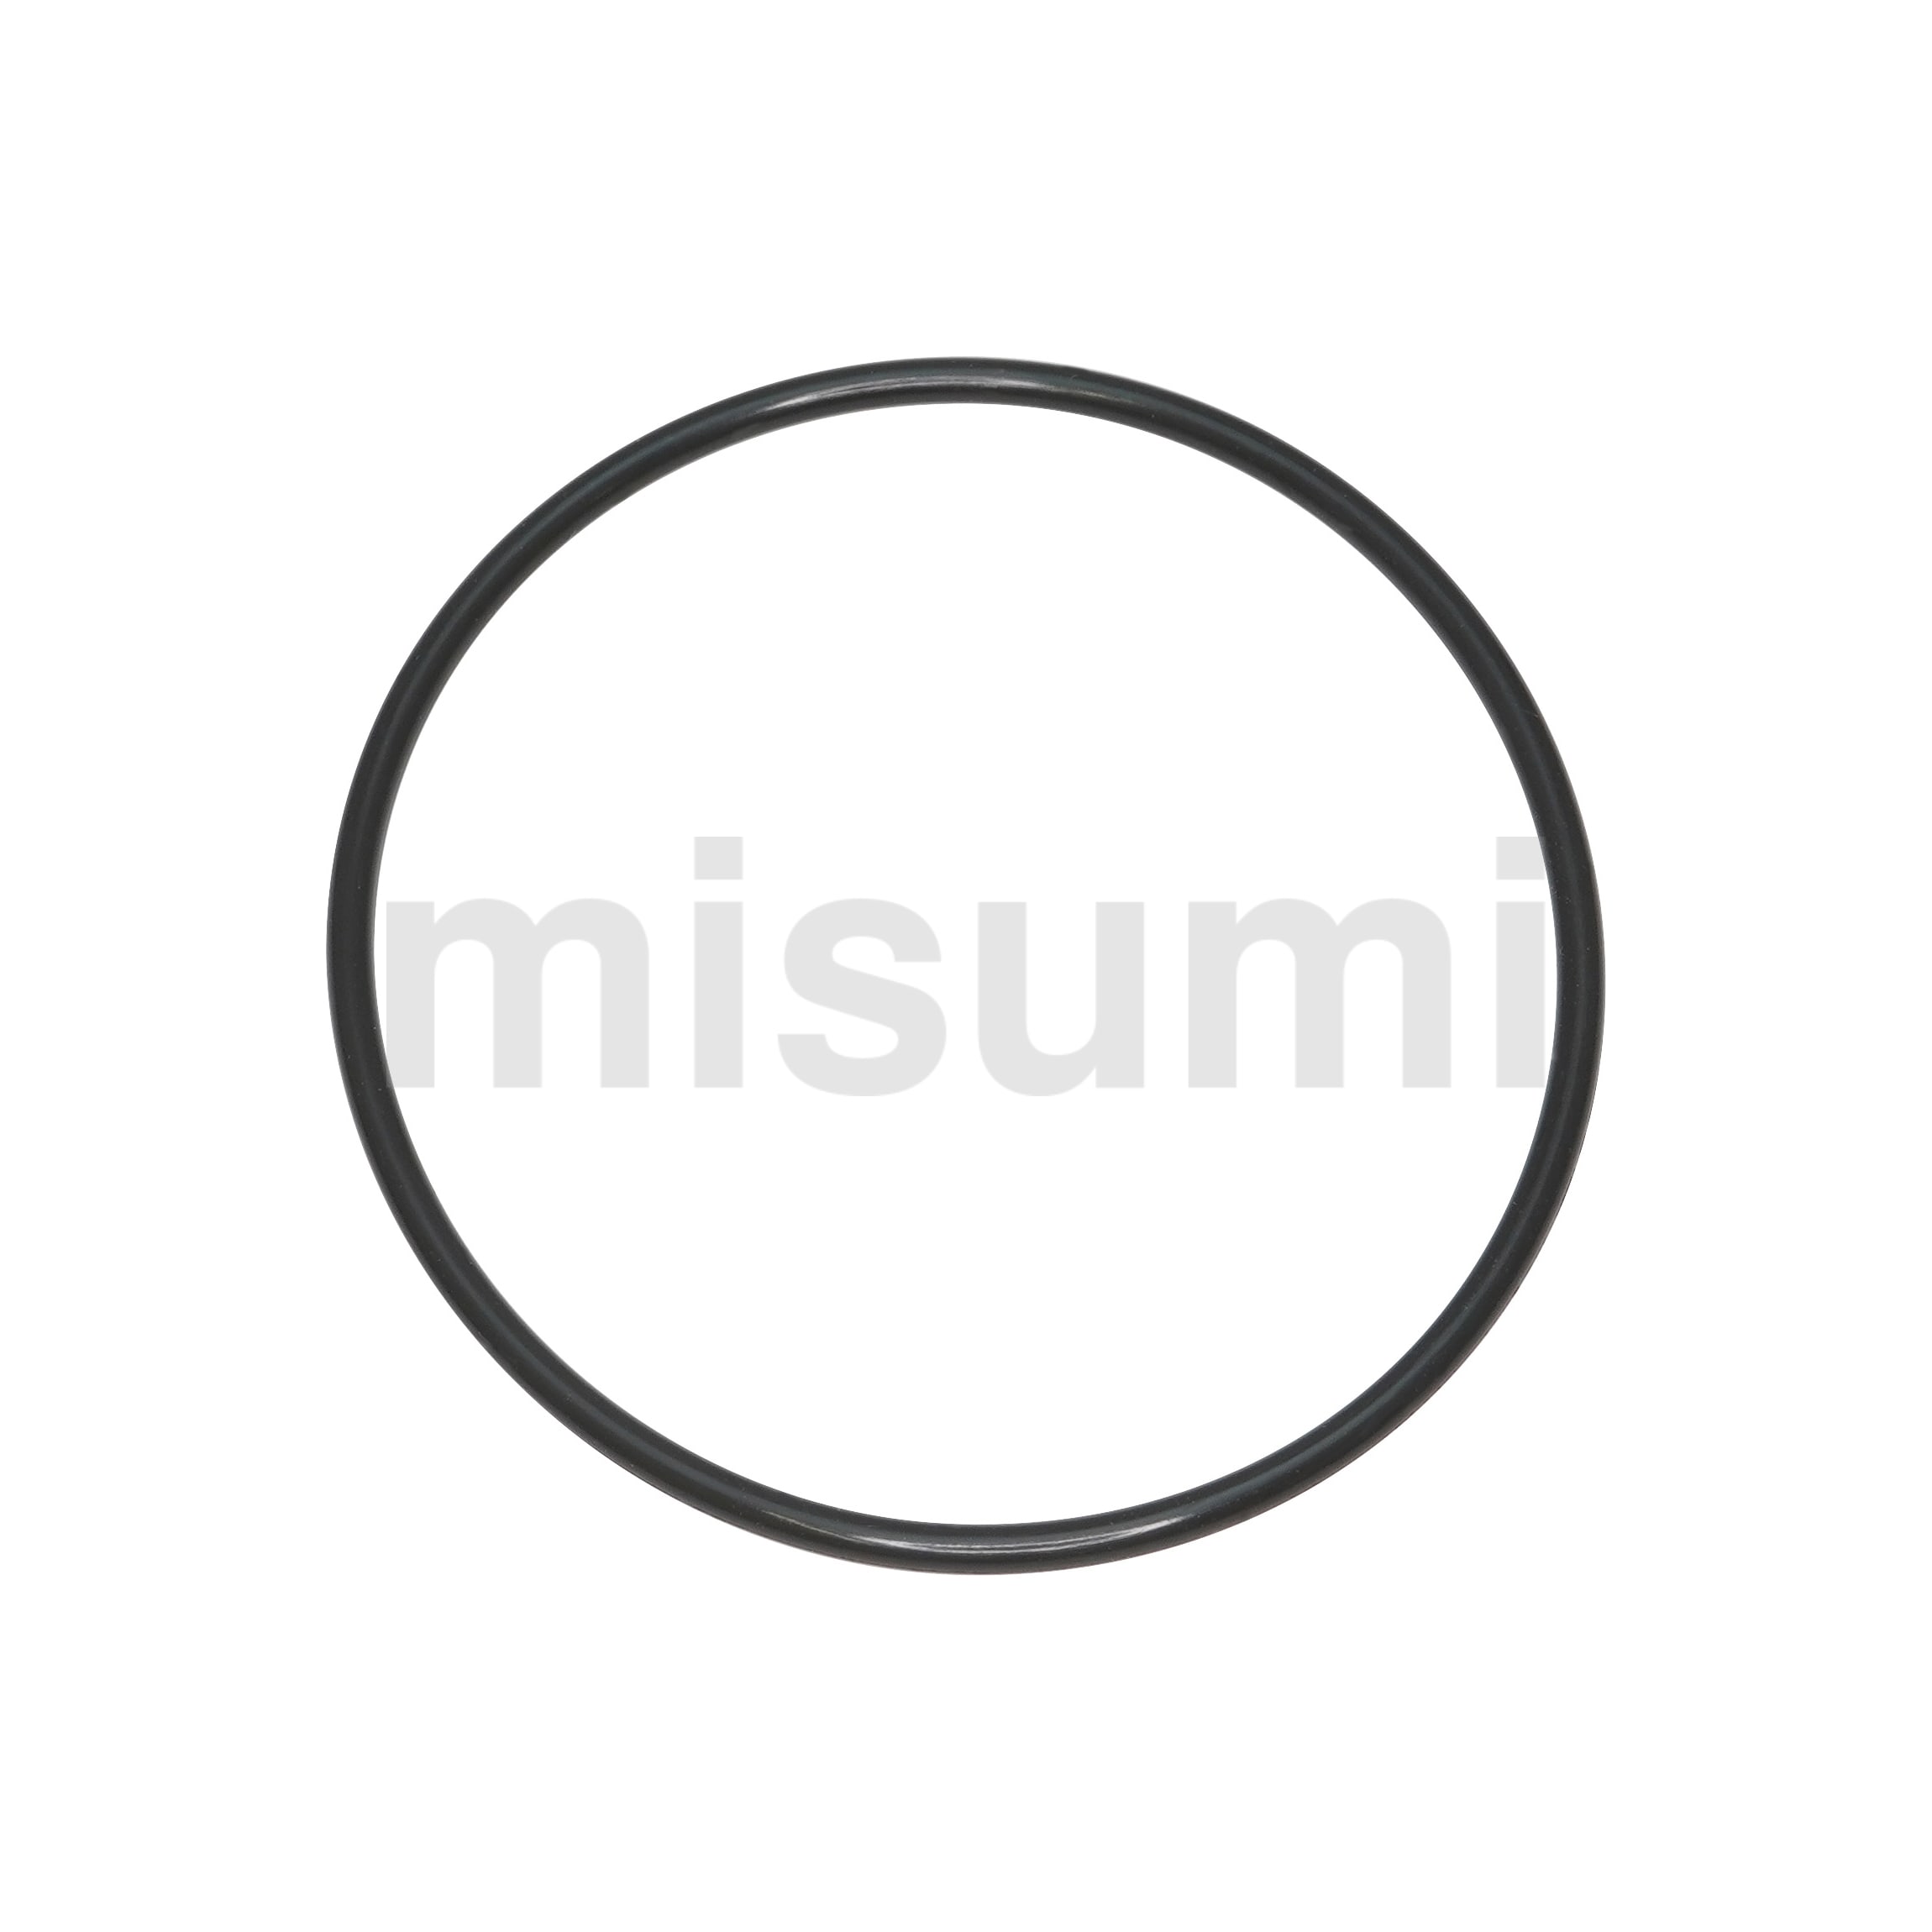 NSA5 | Ｏリング Ｓシリーズ | ミスミ | MISUMI(ミスミ)